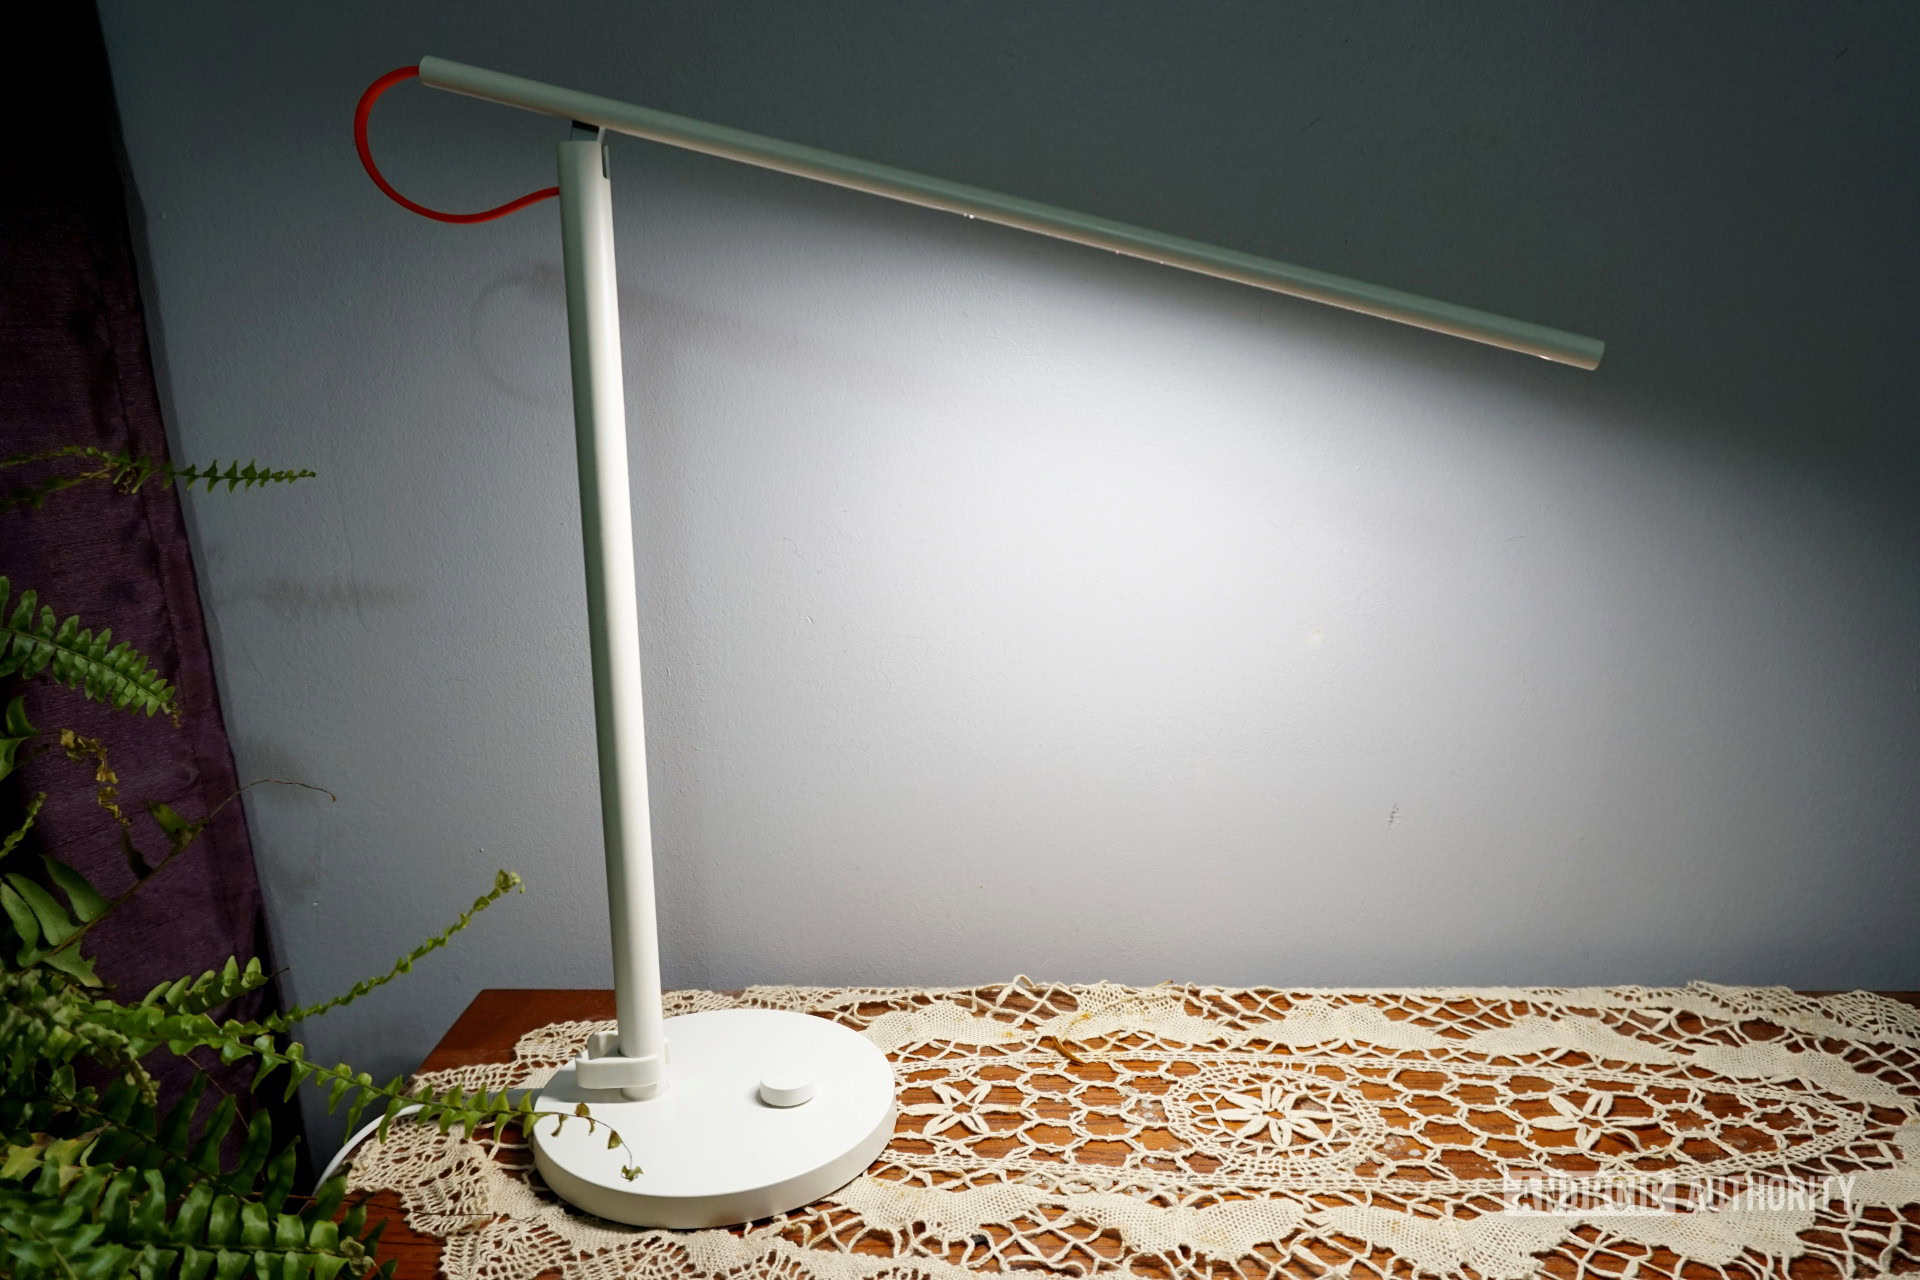 Mi Led Desk Lamp Amazon